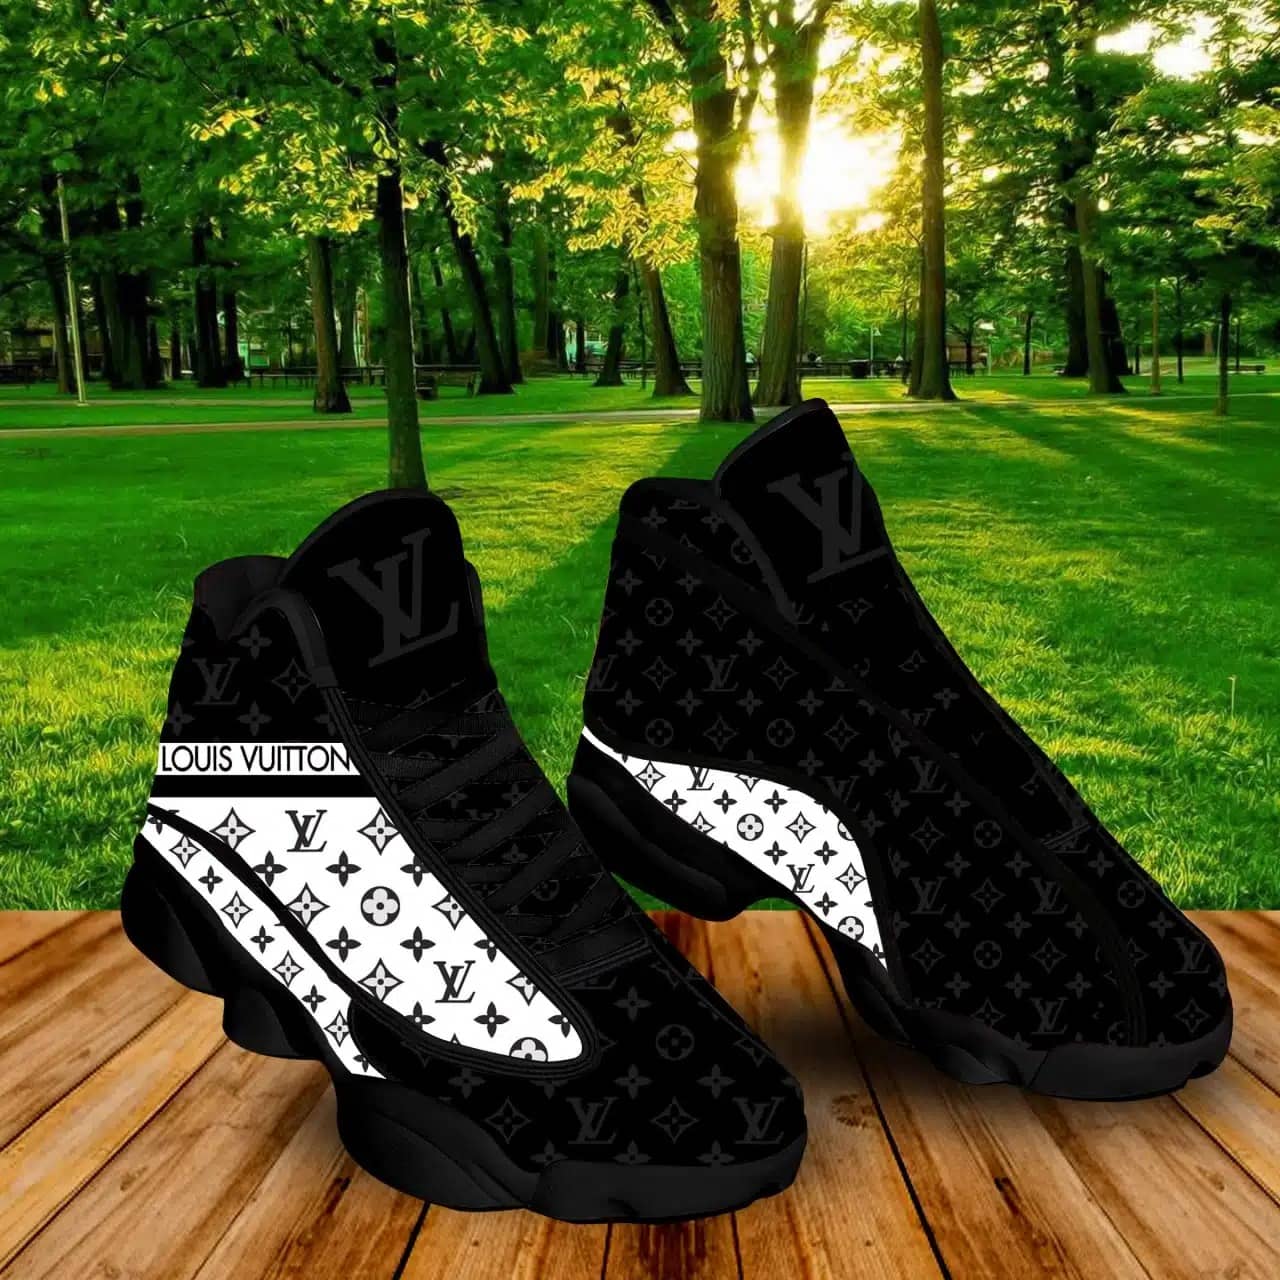 Louis Vuitton Black Air Jordan 13 Sneakers Shoes